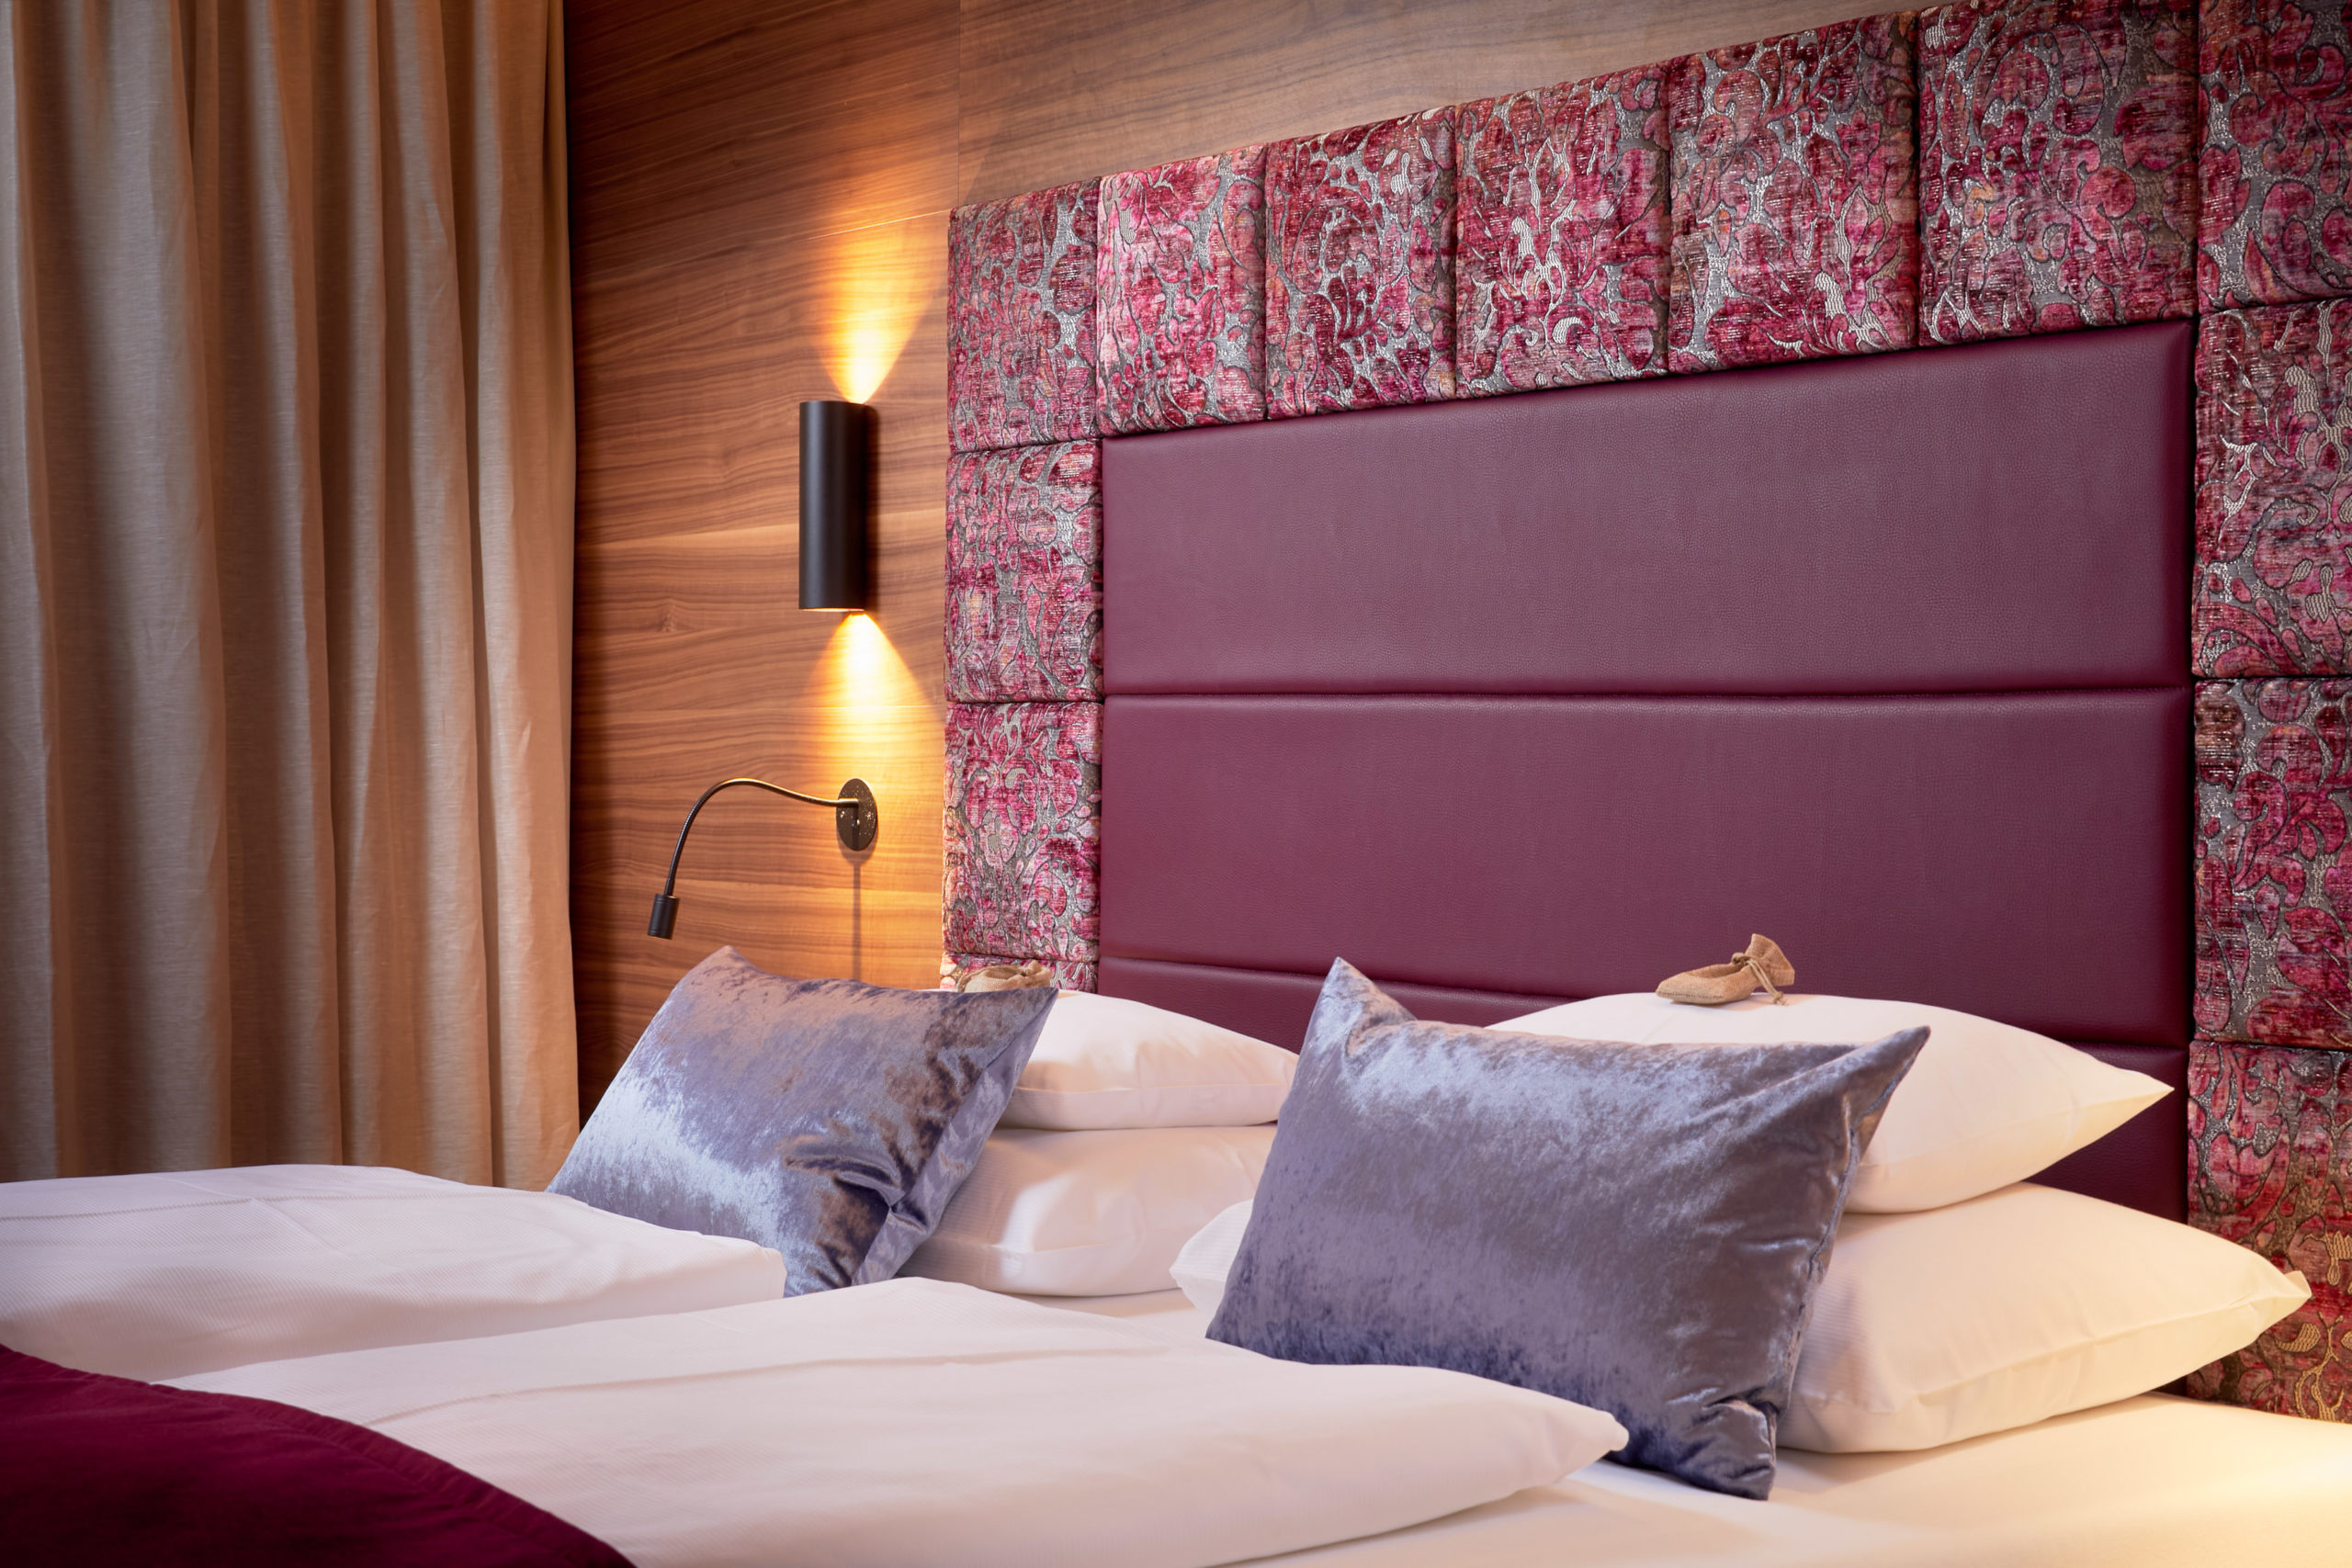 Rooms and Suites at the Ayurveda Resort Mandira